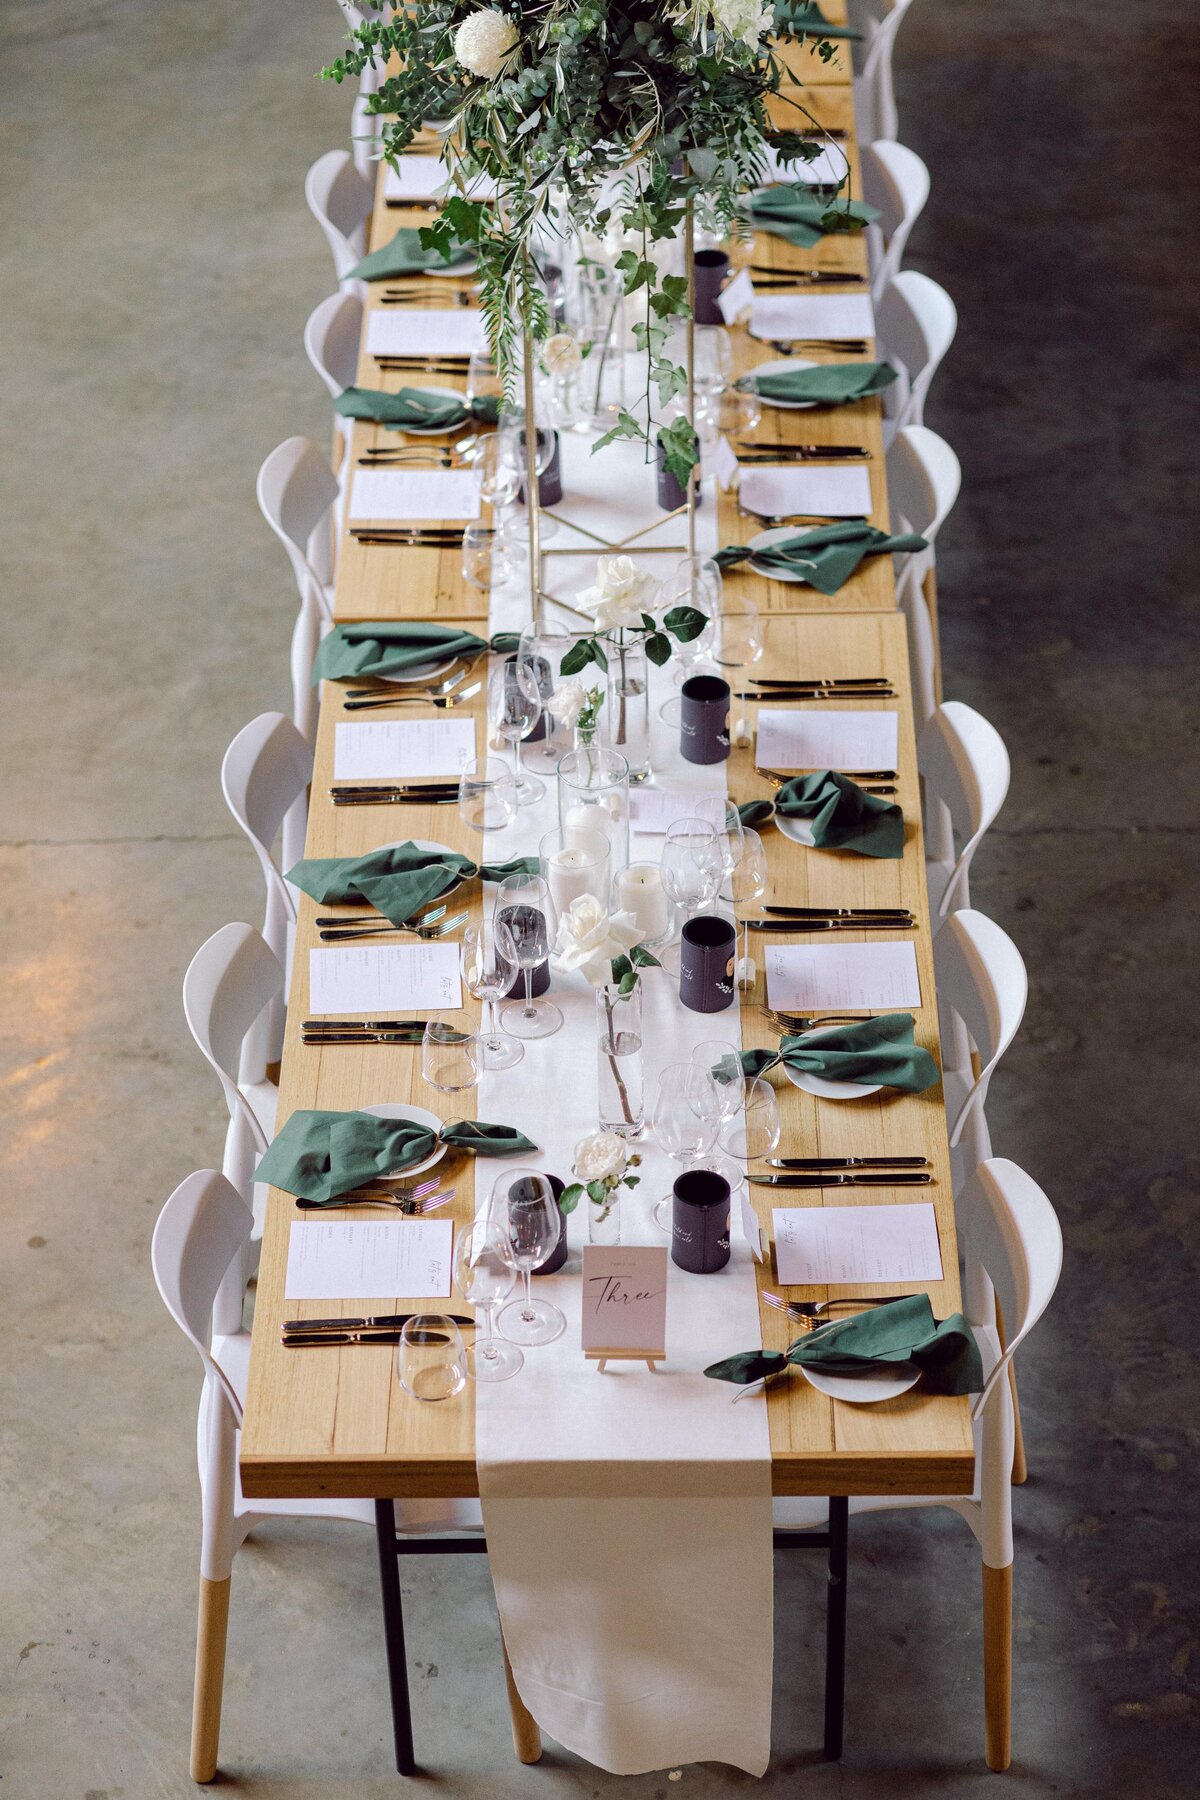 wedding reception table setup